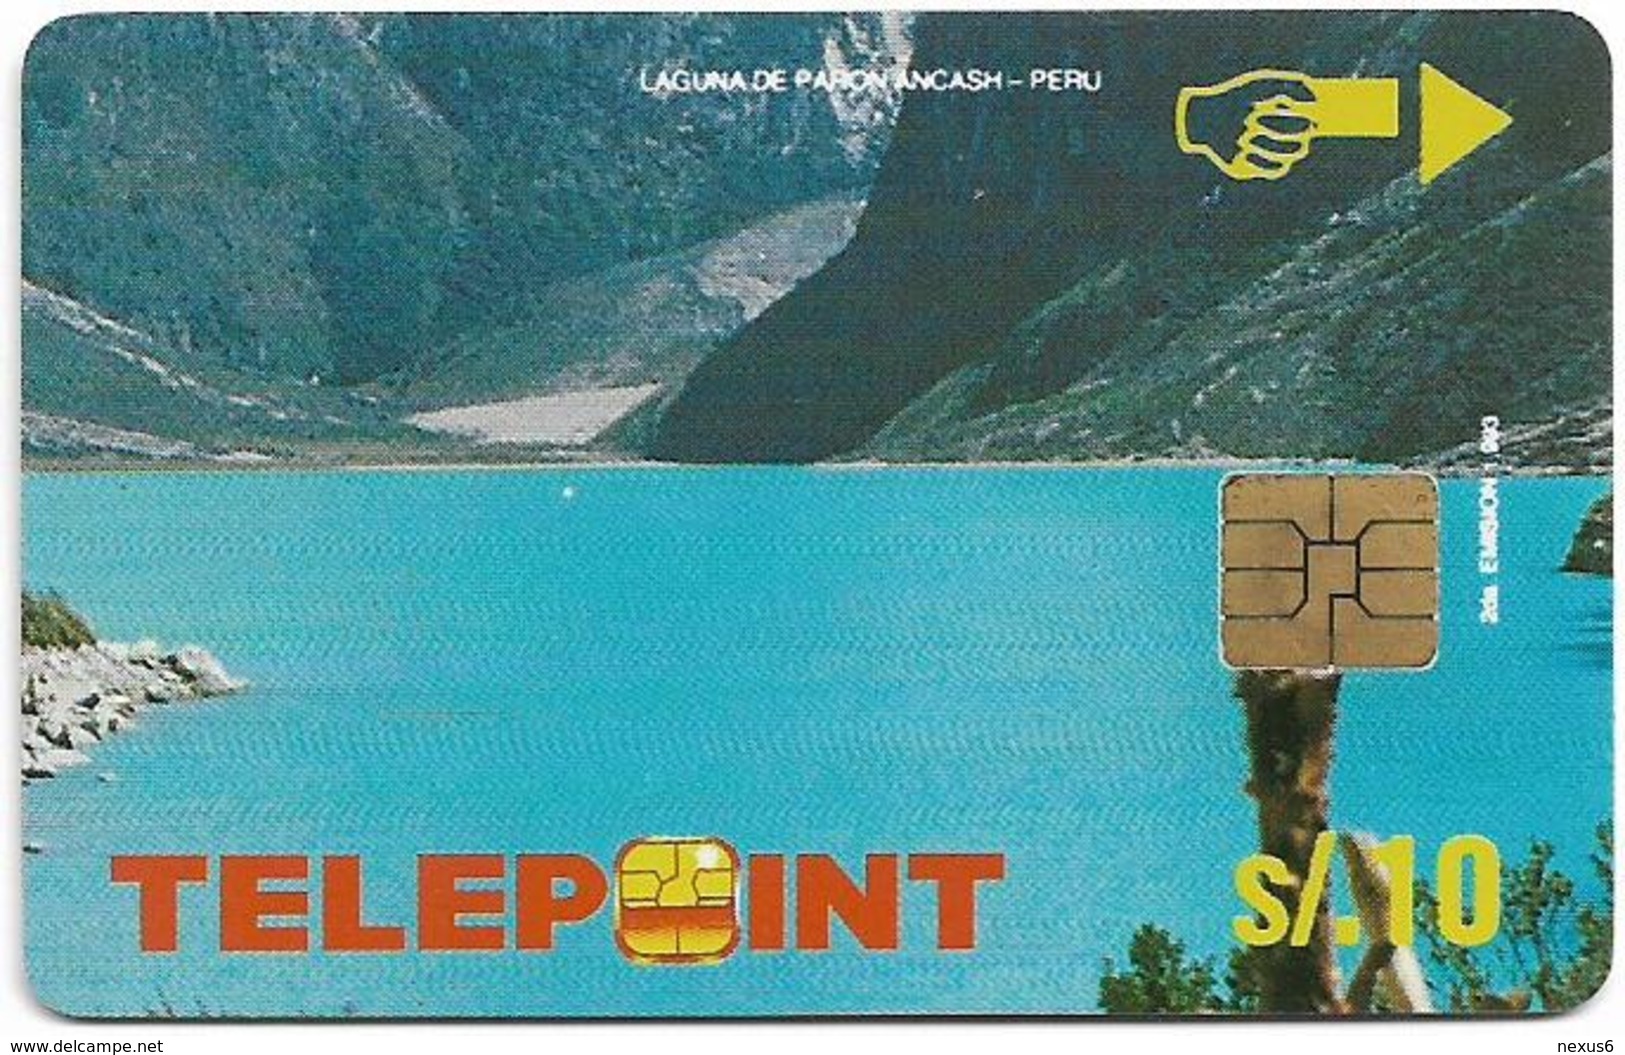 Peru - Telepoint - Laguna De Paron Puzzle Piece 4/4, 10Sol, 25.750ex, Used - Peru